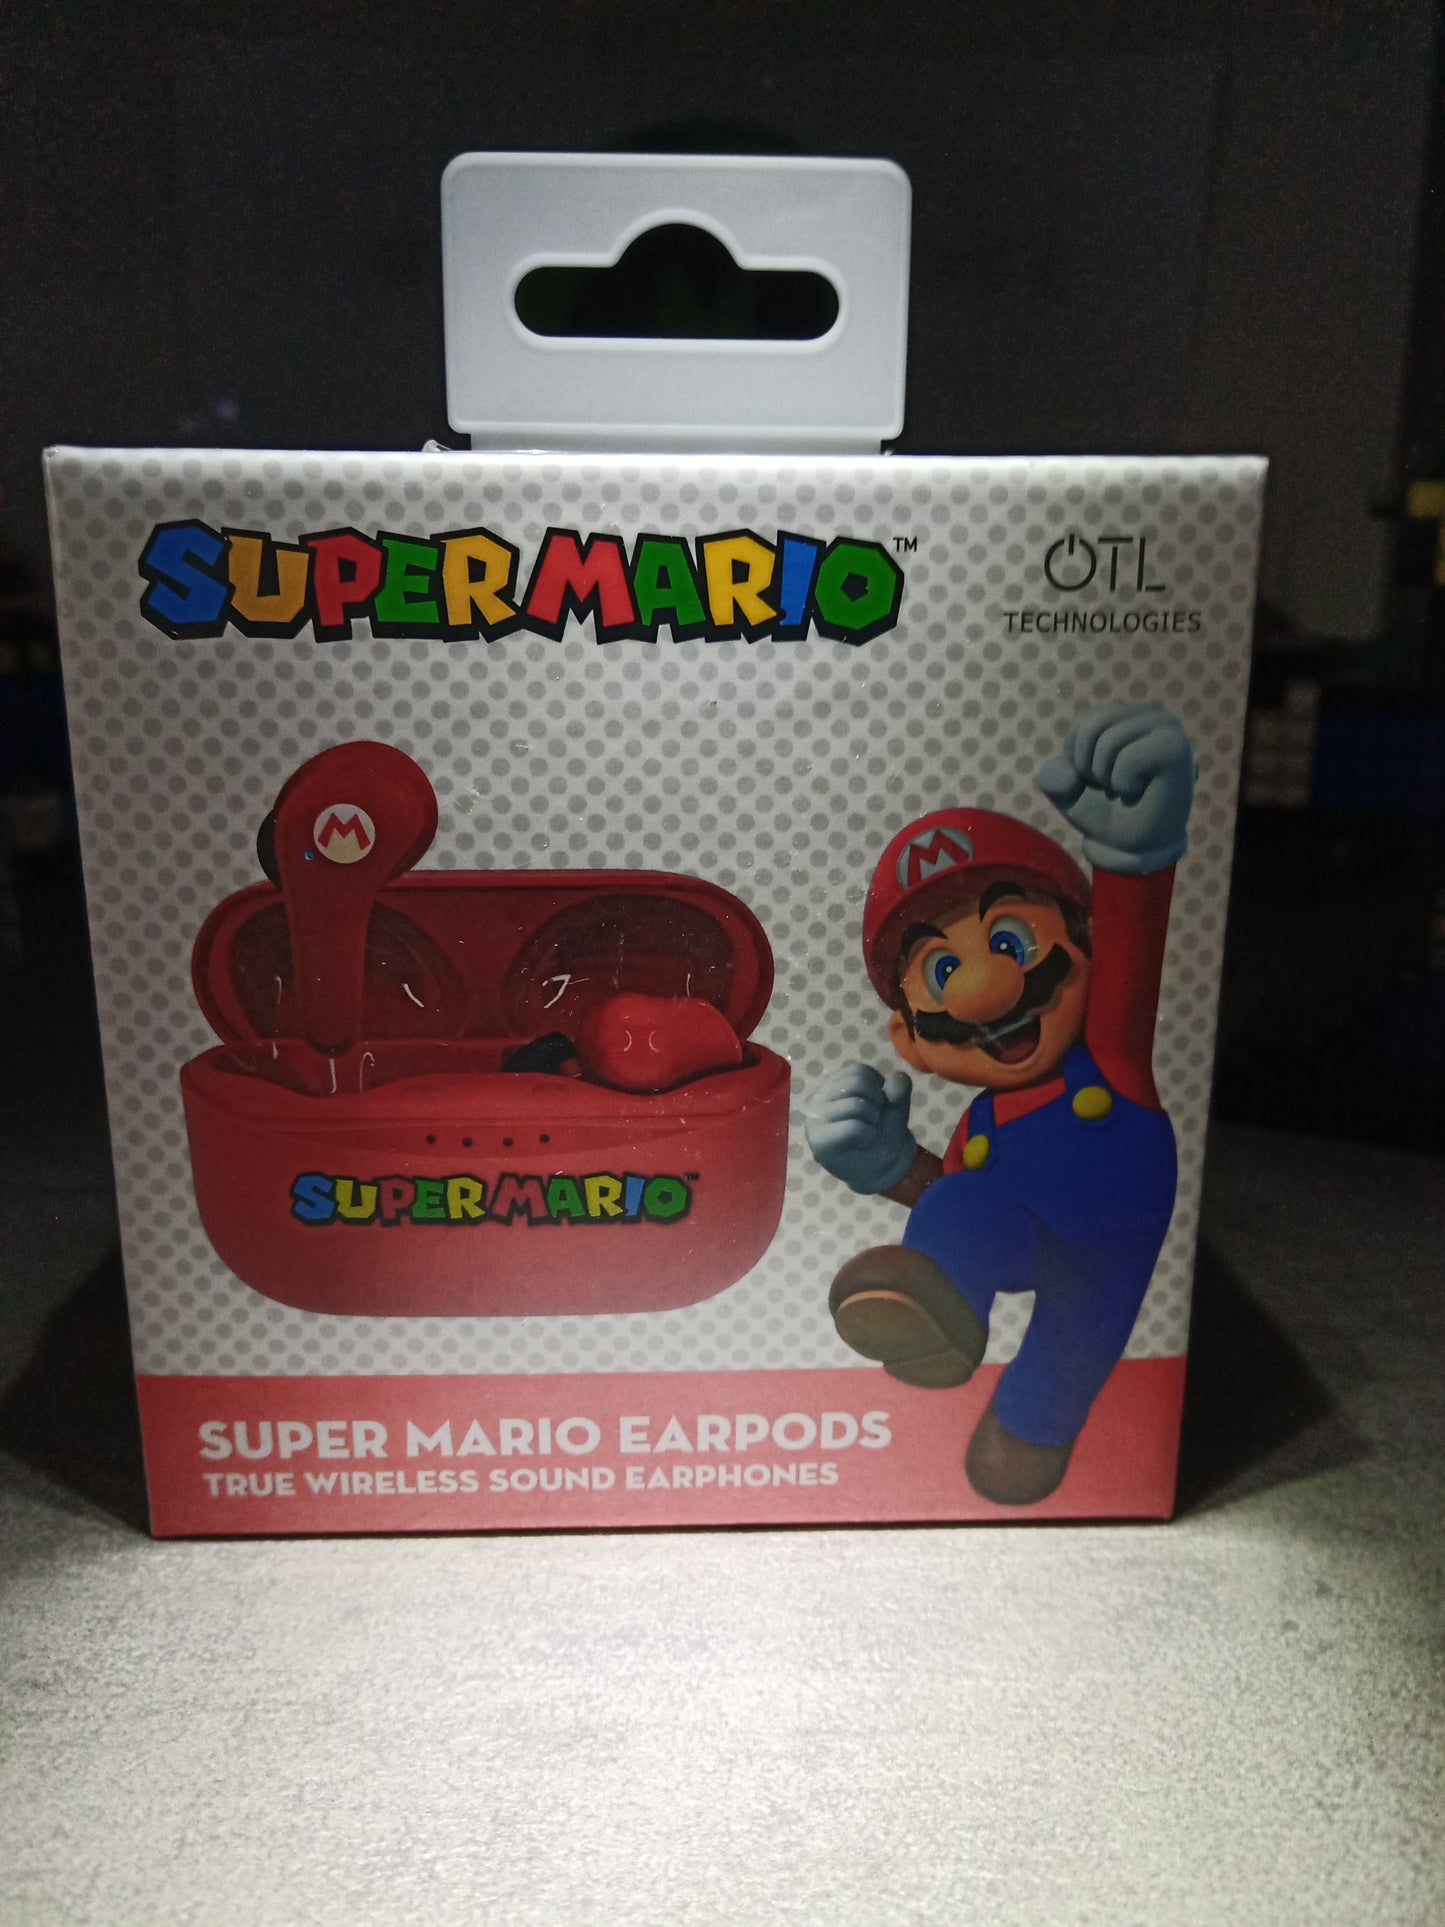 Earpods Super Mario